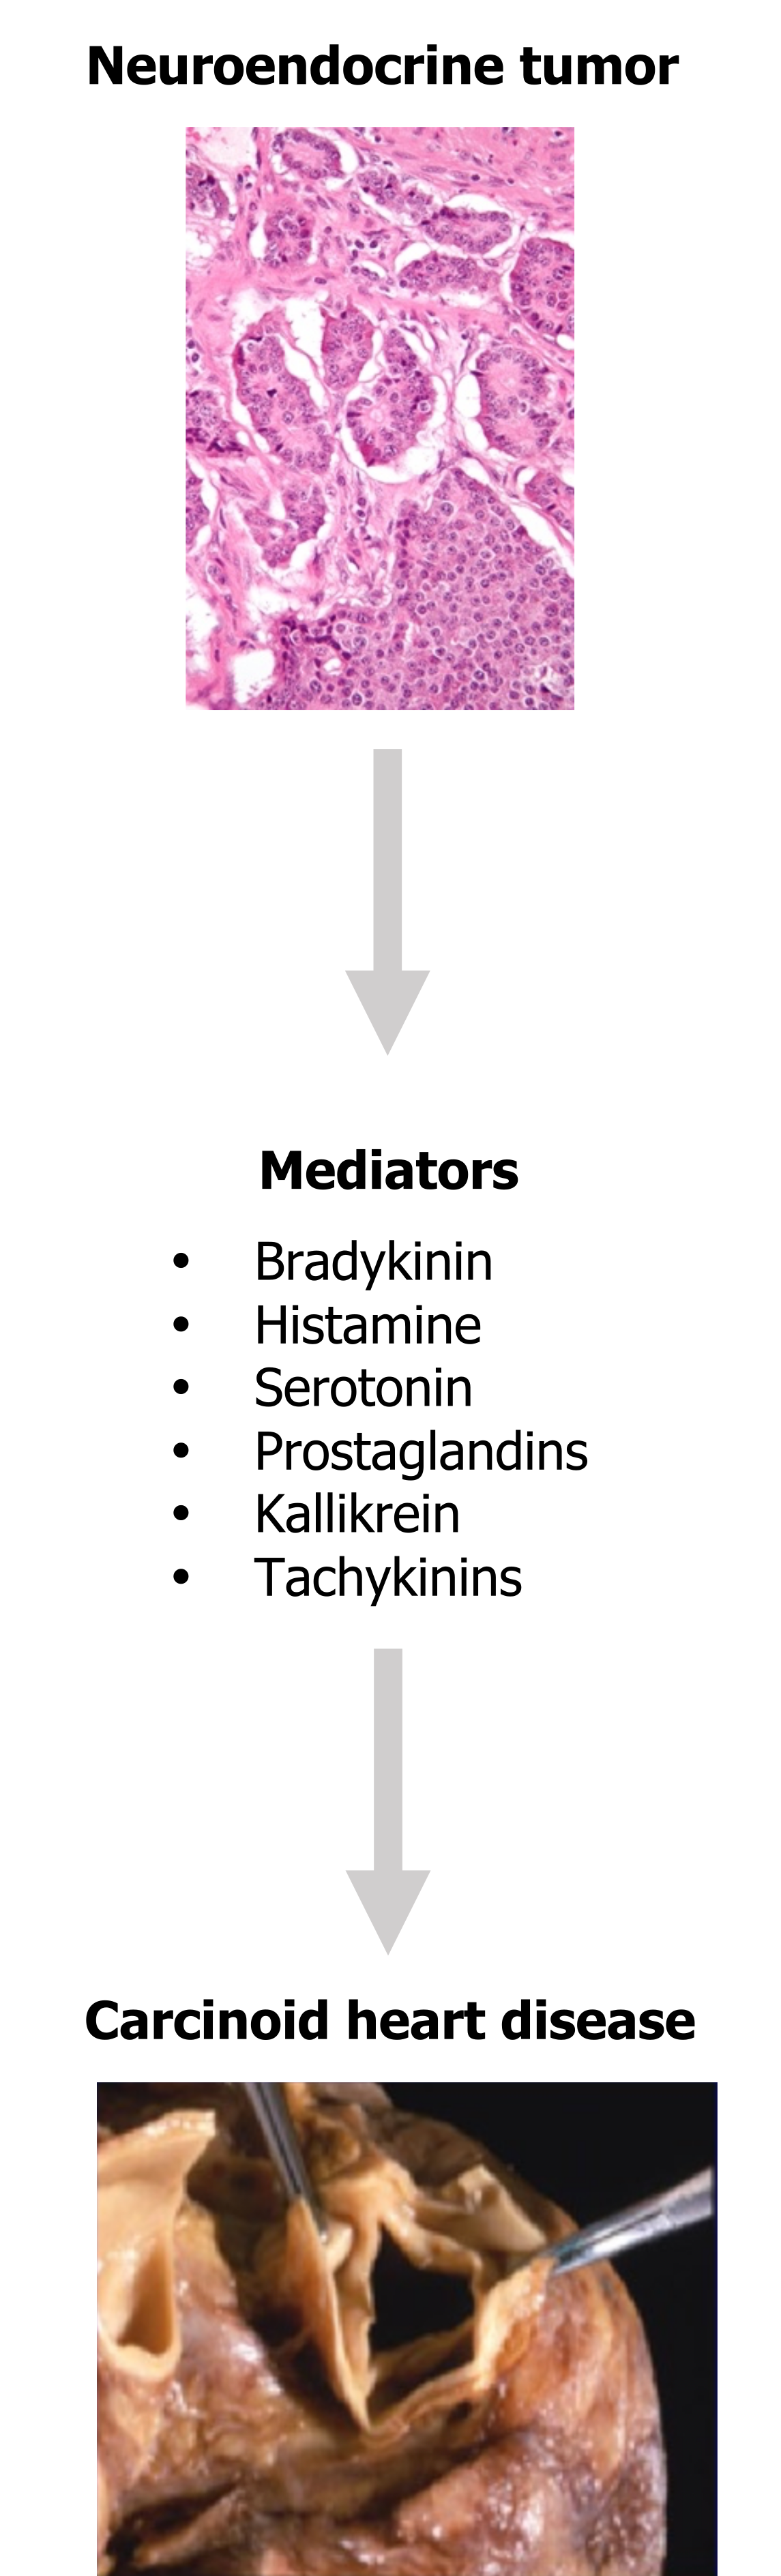 Neuroendocrine tumor arrow with text mediators to include bradykinin, histamine, serotonin, prostaglandins, kallikrein, and tachykinins arrow carcinoid heart disease.